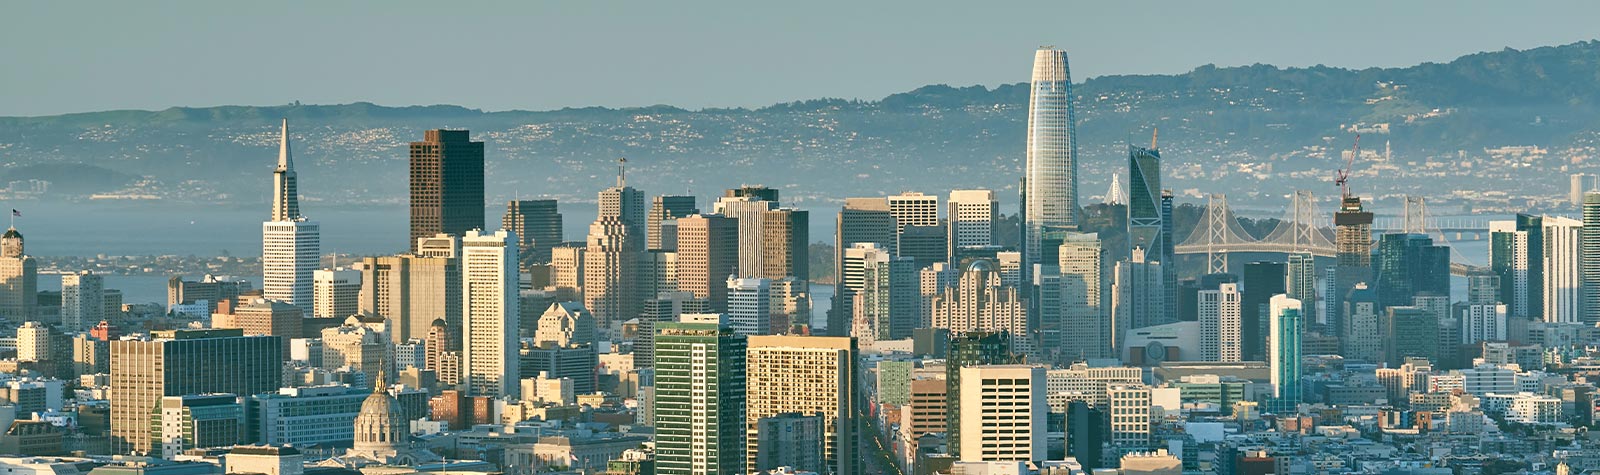 Building Radar goes to San Francisco